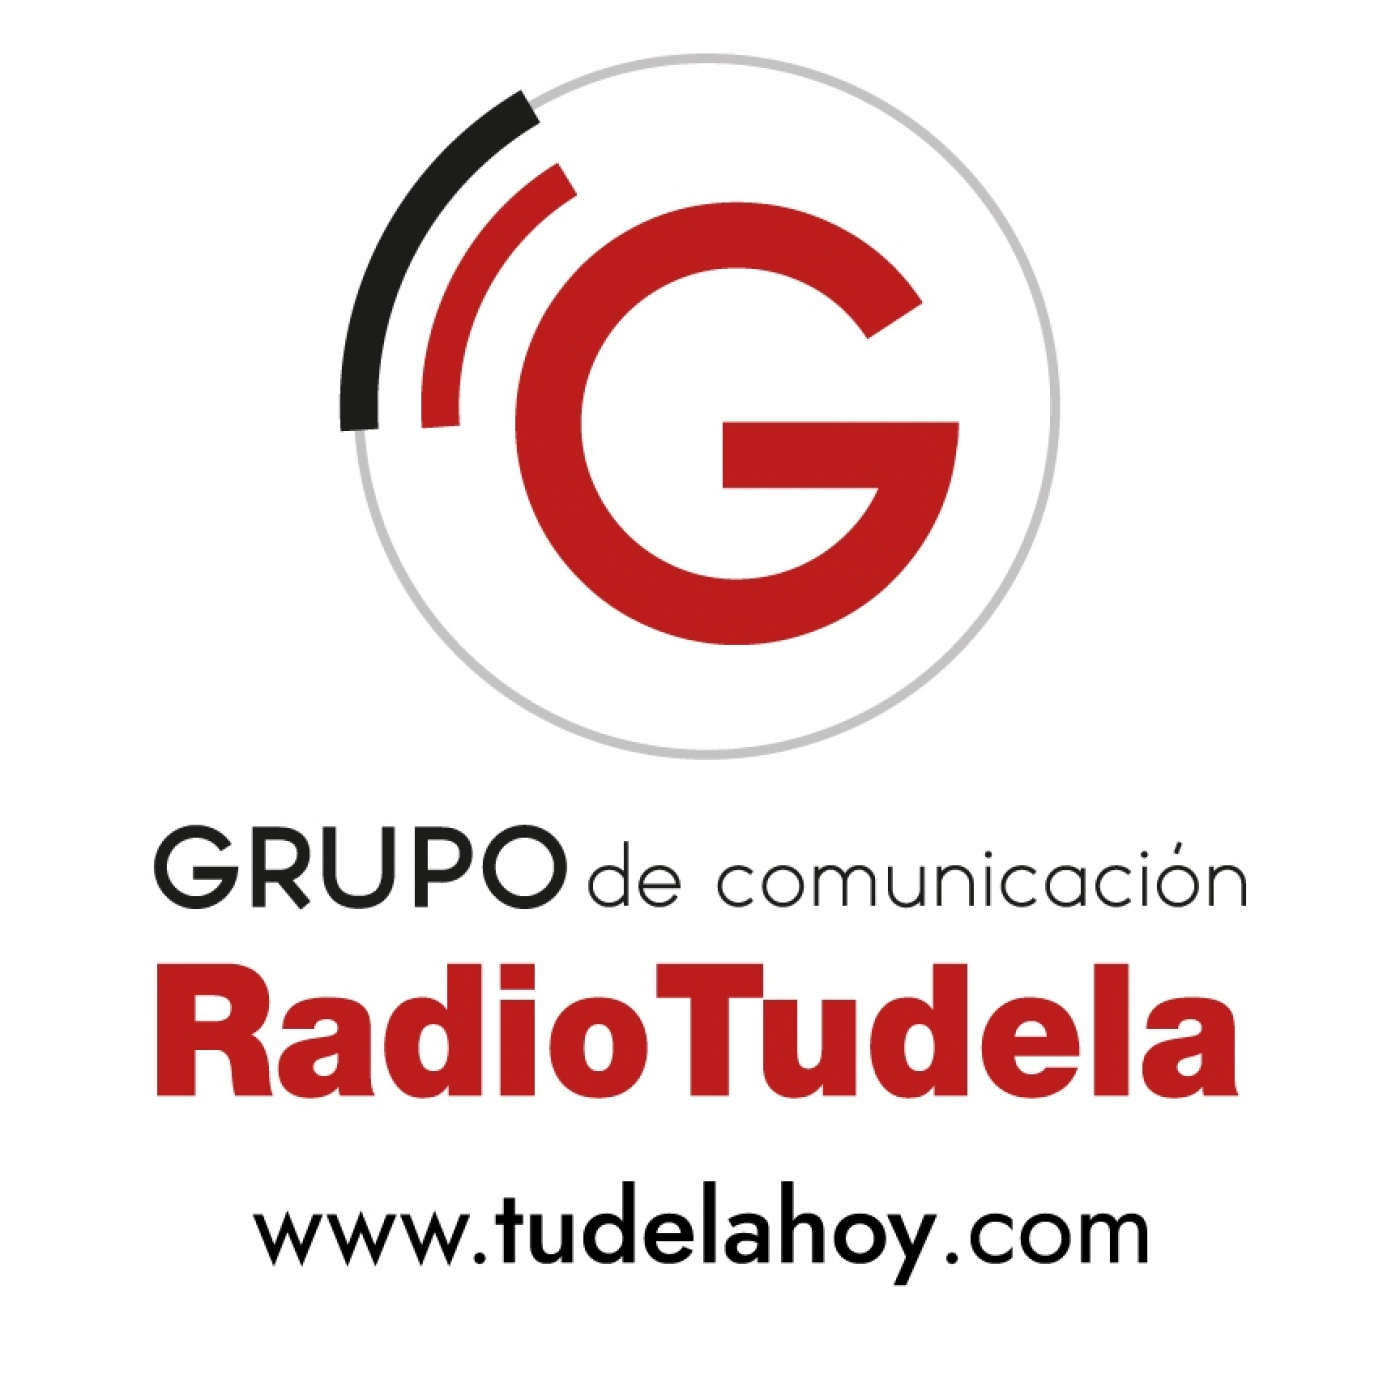 Radio Tudela, esRadio